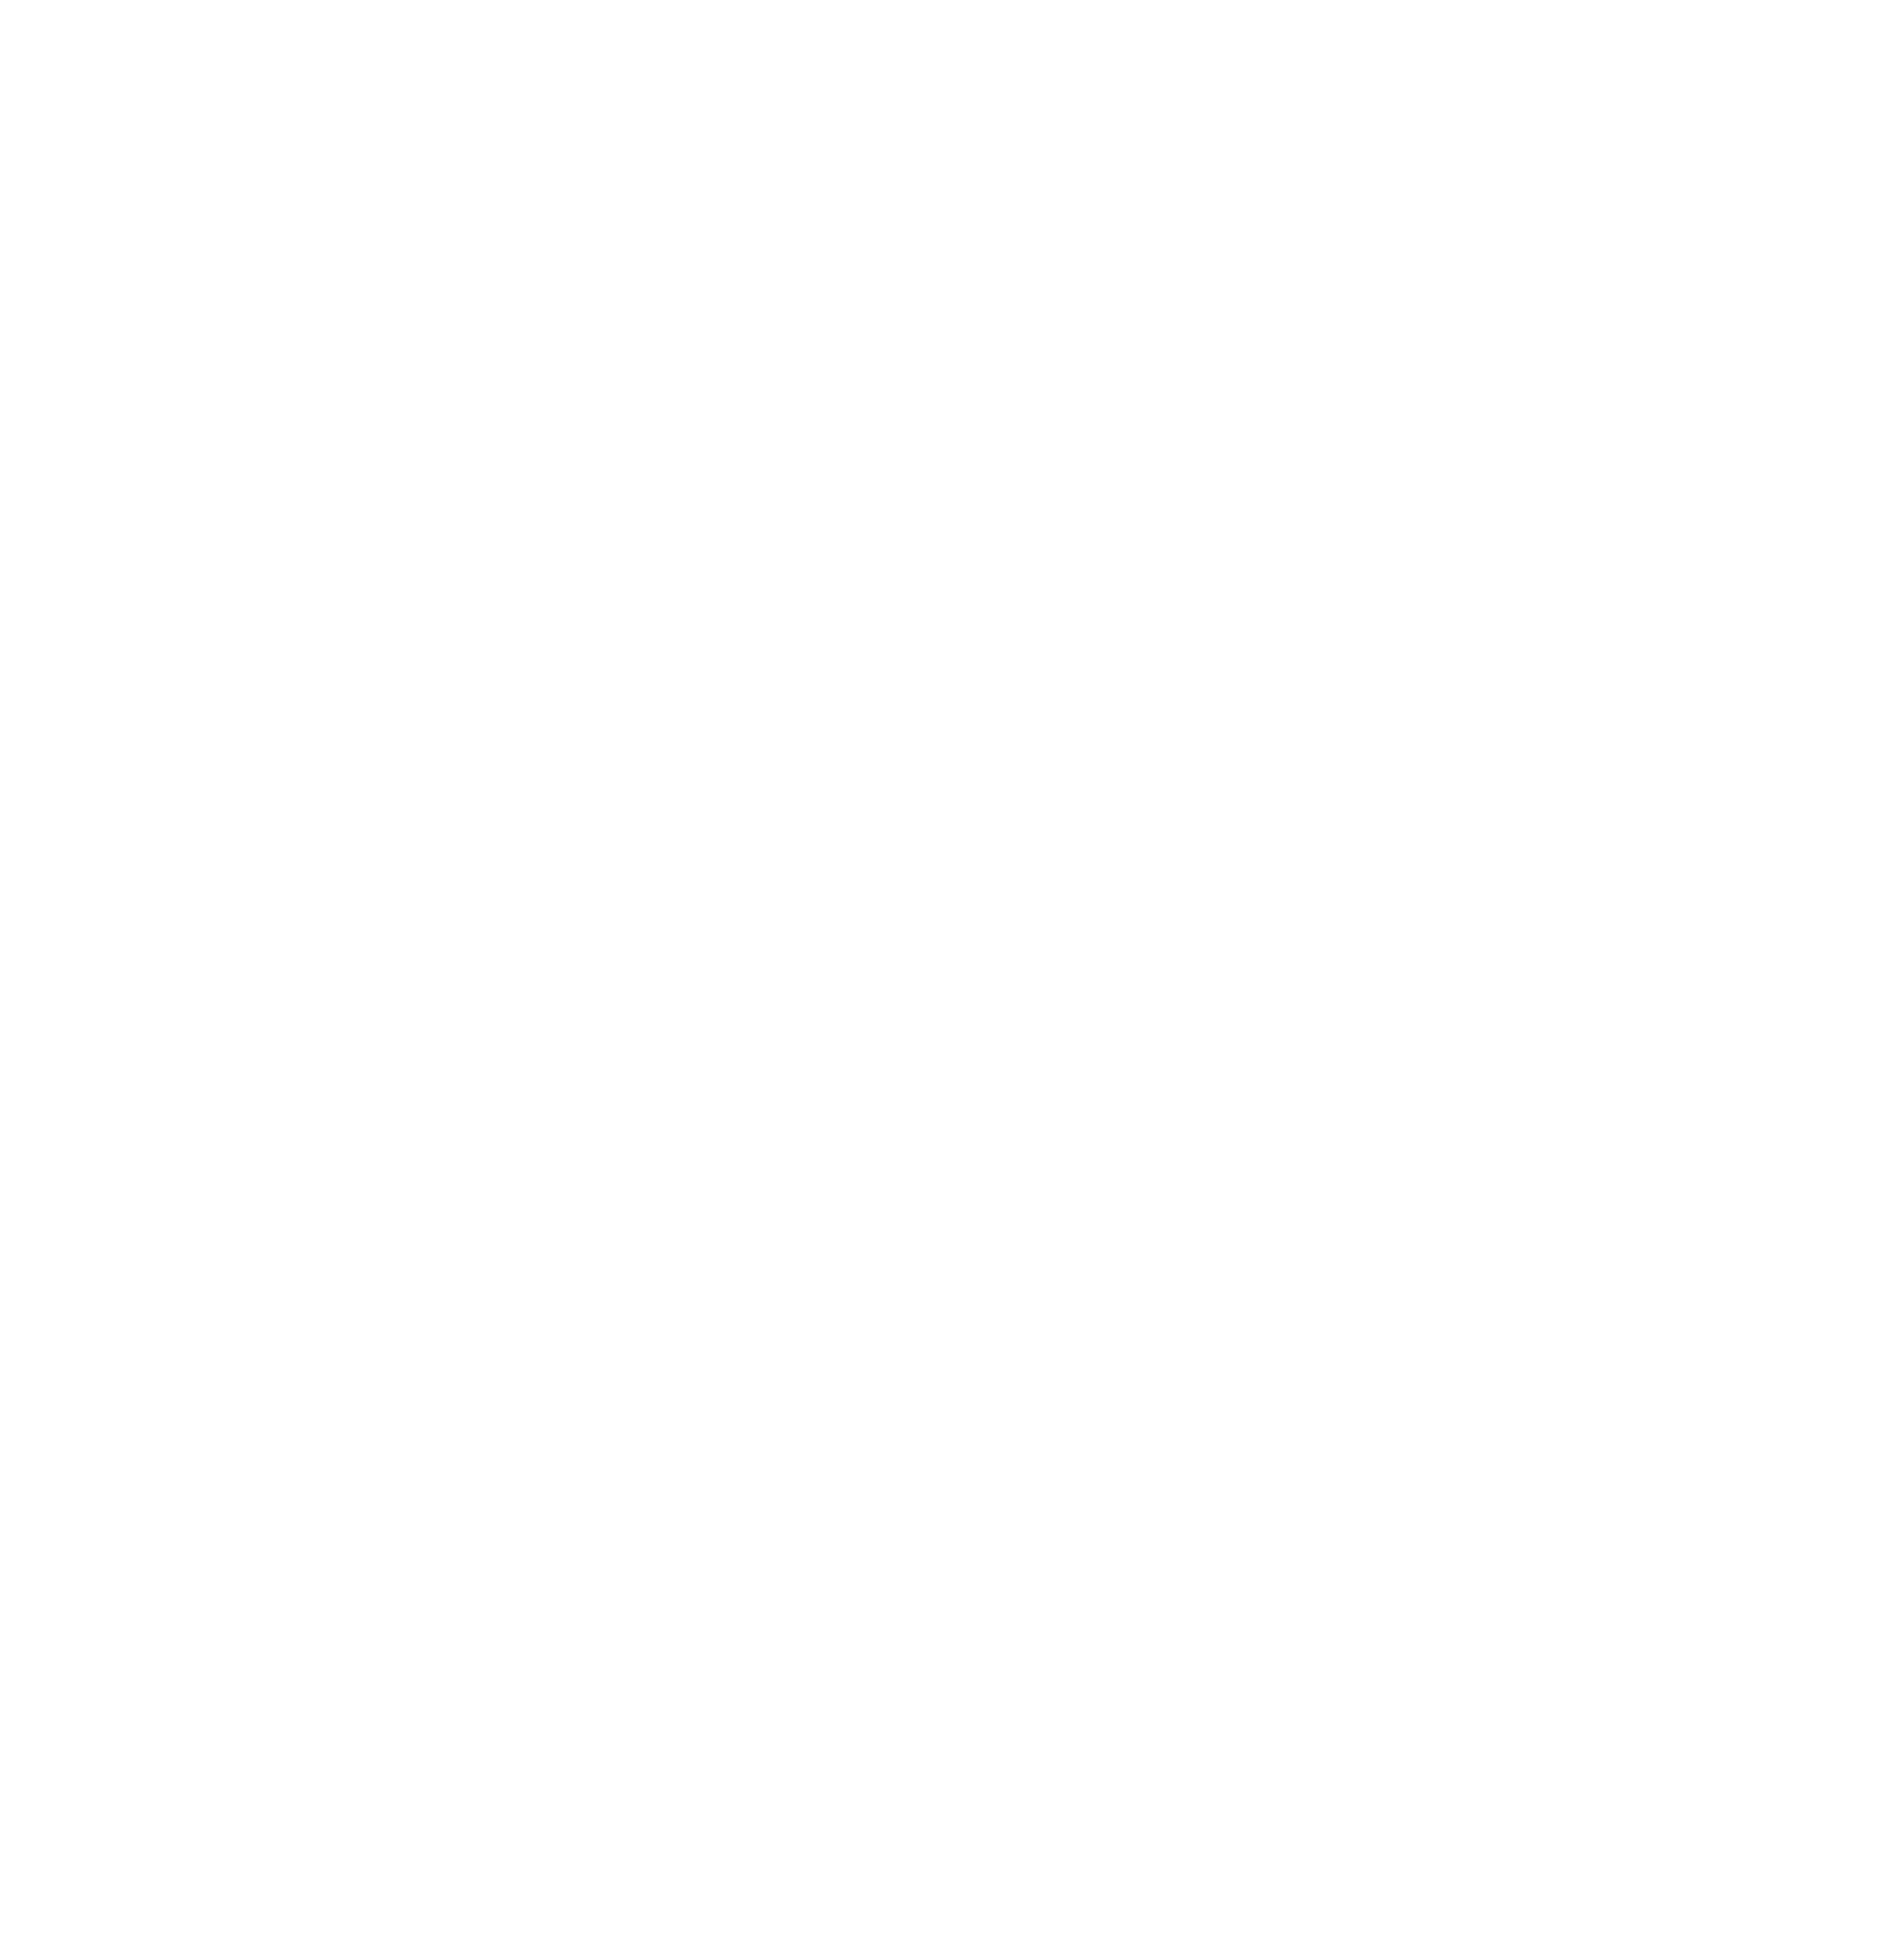 ZAK MEDIA WORKS